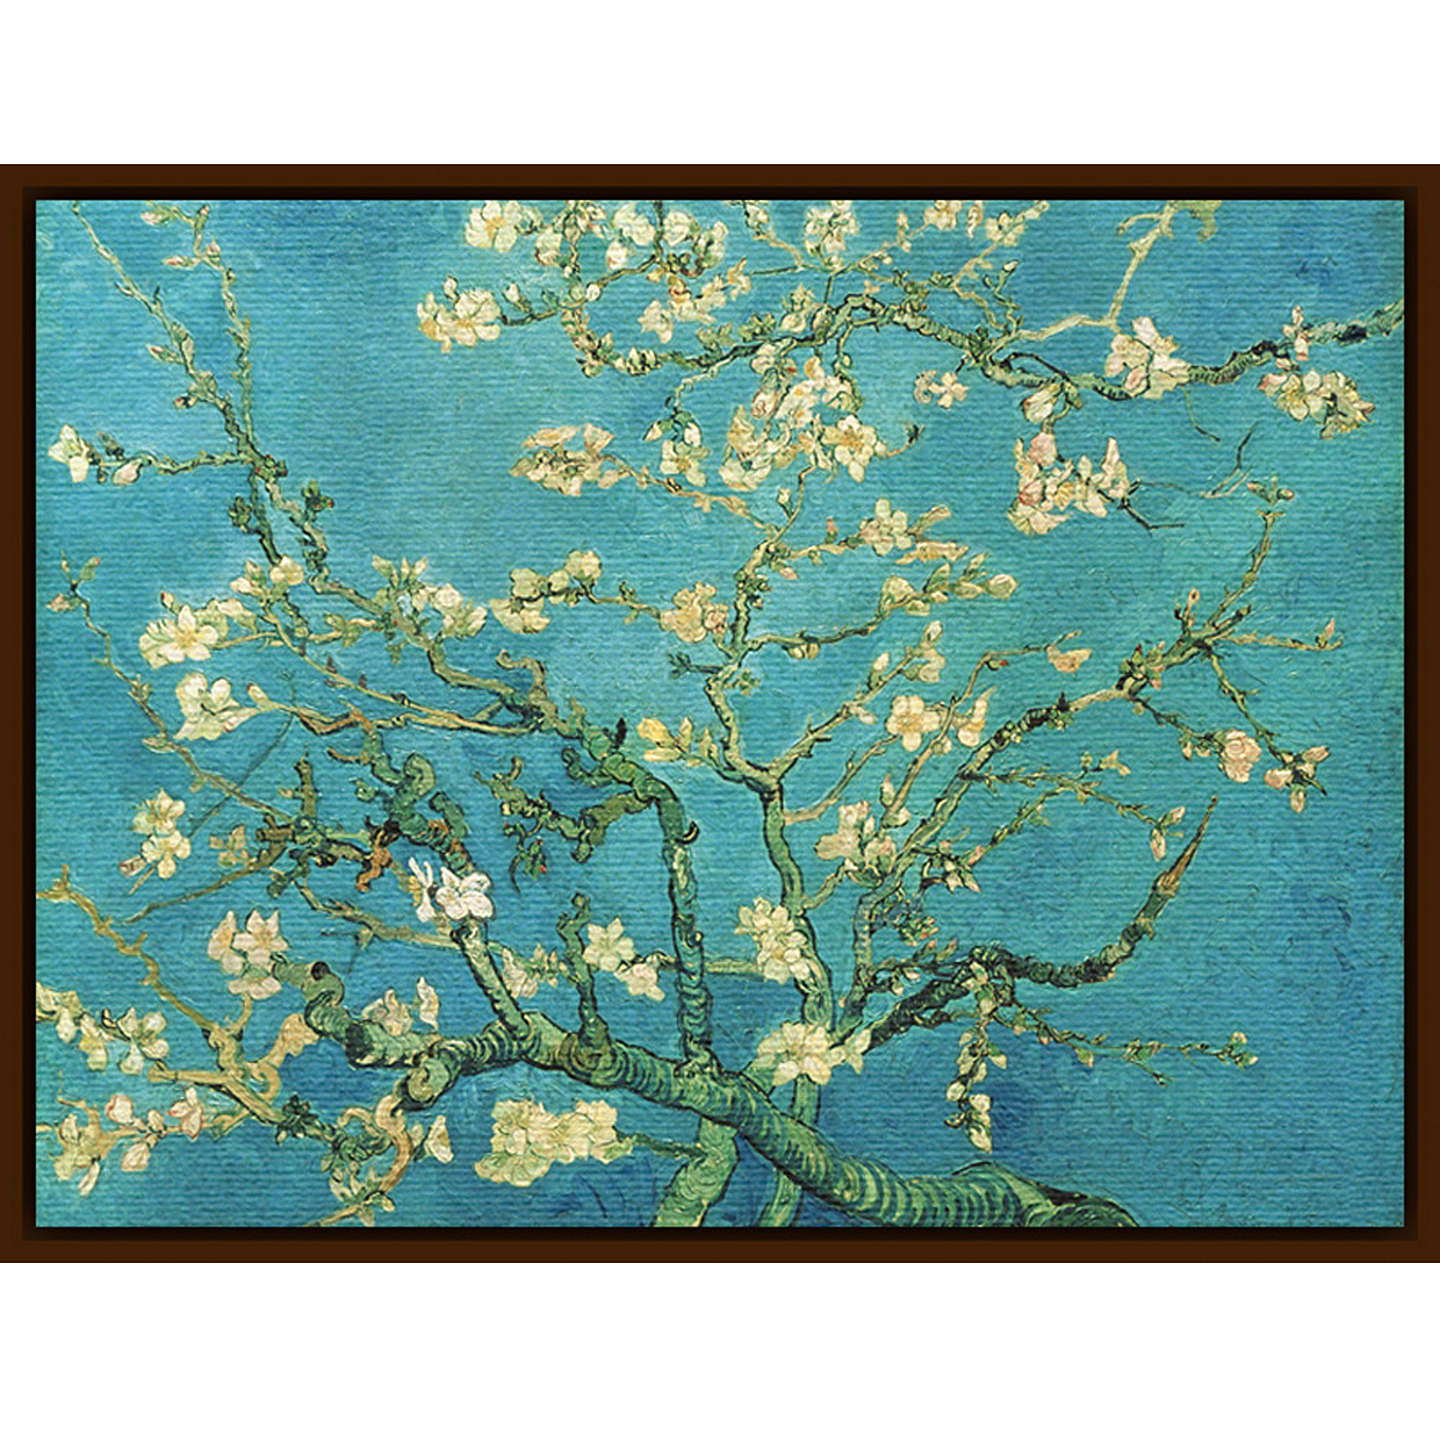 Van Gogh - Almond Blossom at John Lewis